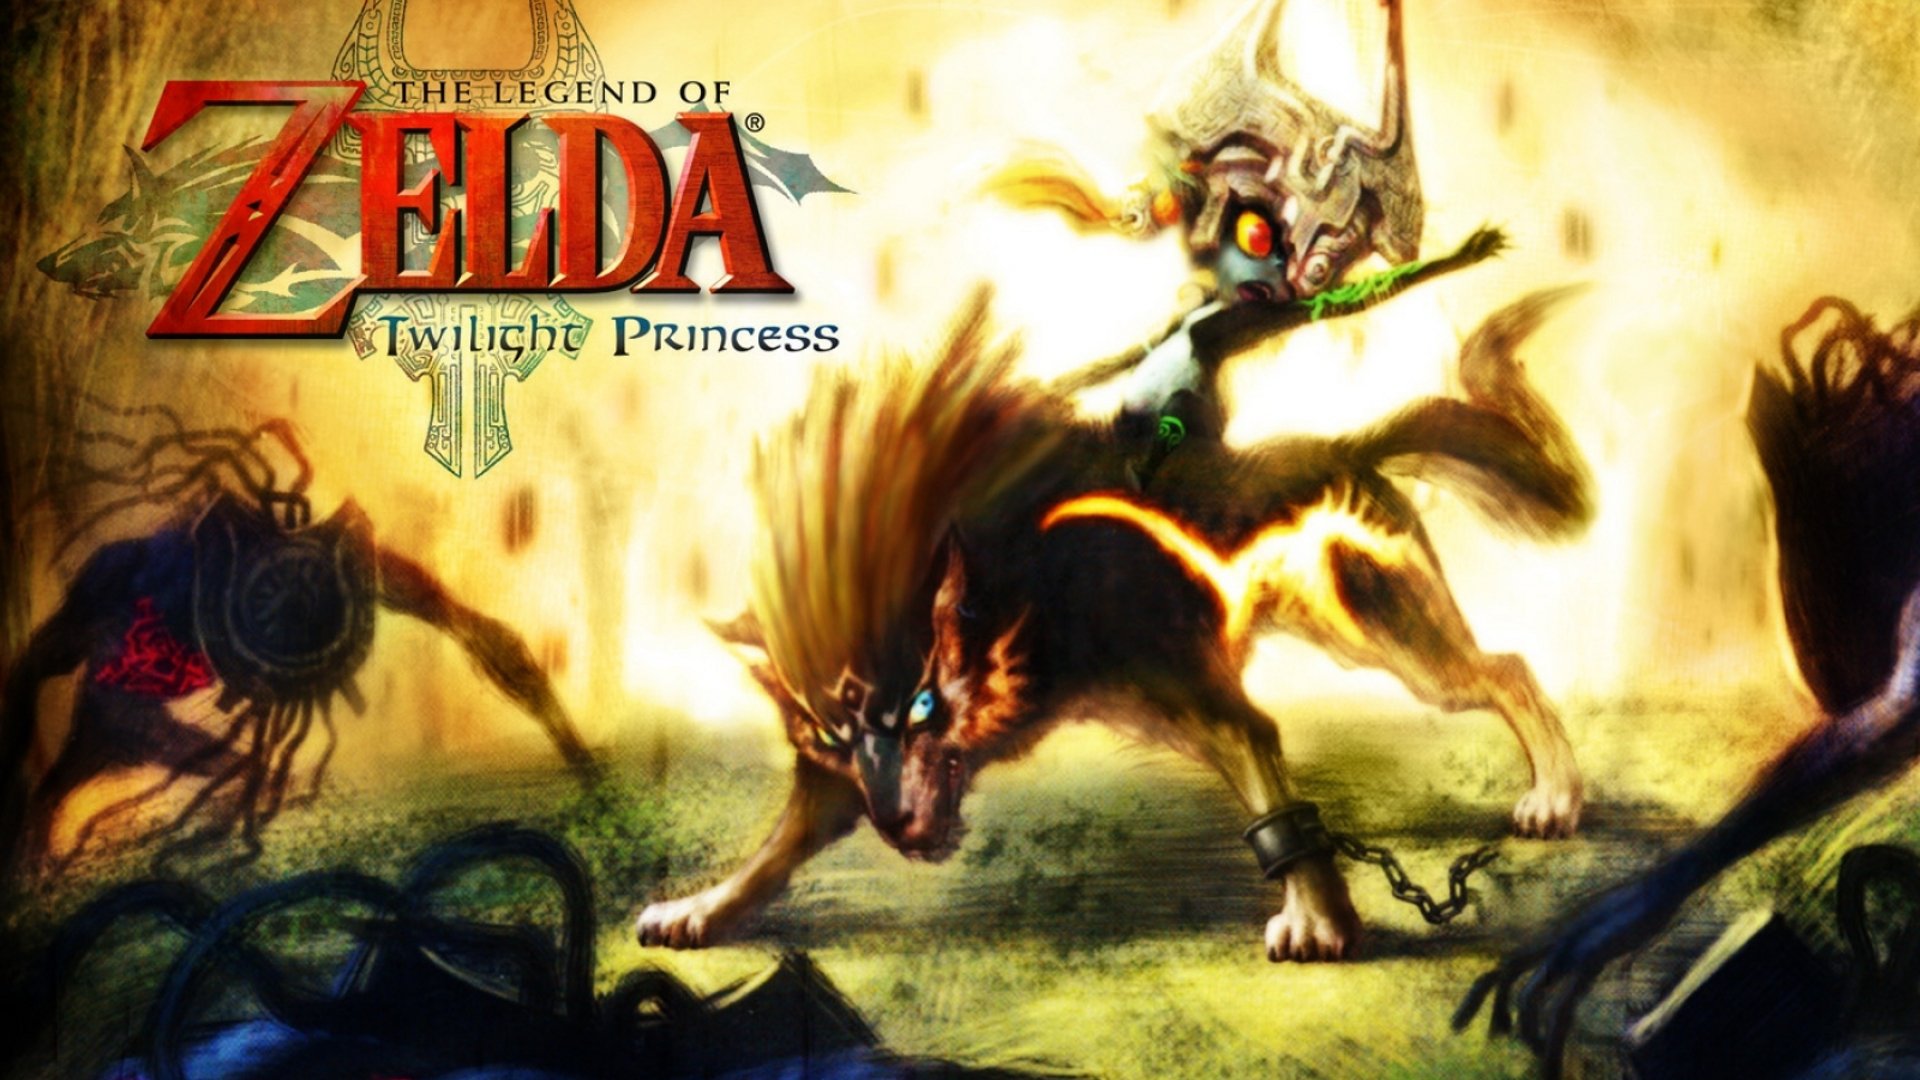 legend of zelda twilight princess wallpaper,action adventure game,demon,pc game,fictional character,cg artwork